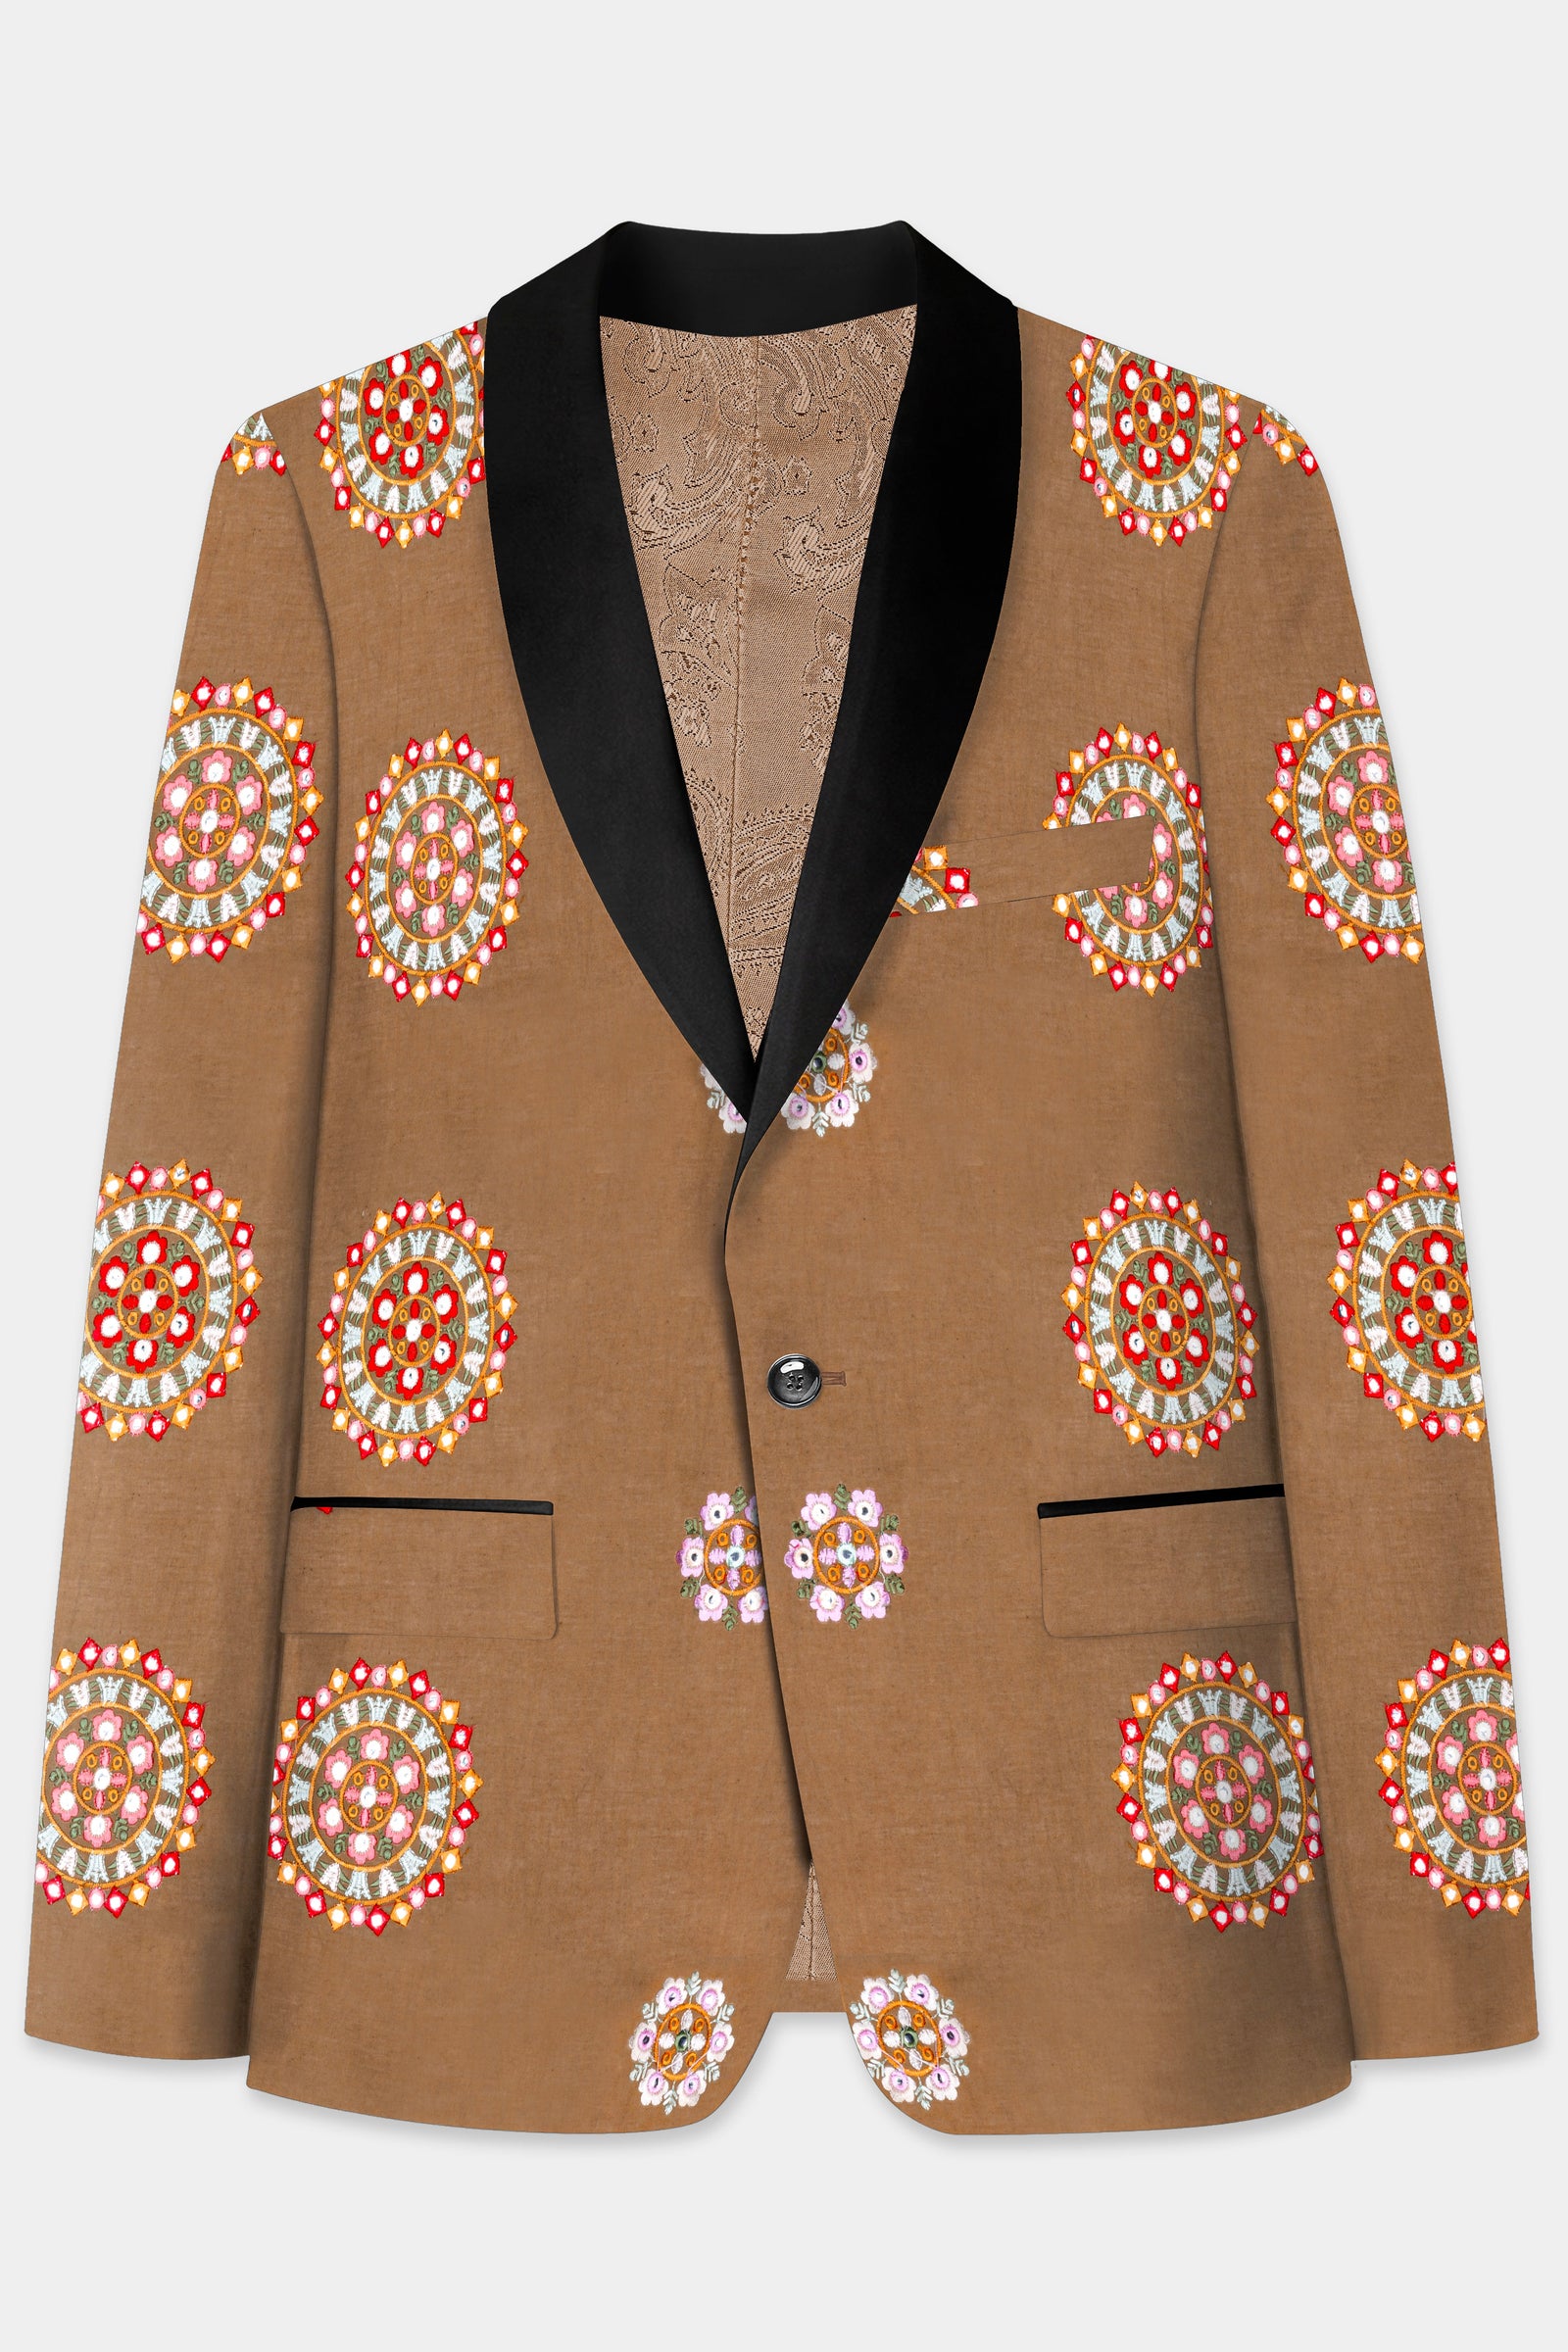 Shop Suits for Men - Choose Suit Size, Fabric, Pattern and Color